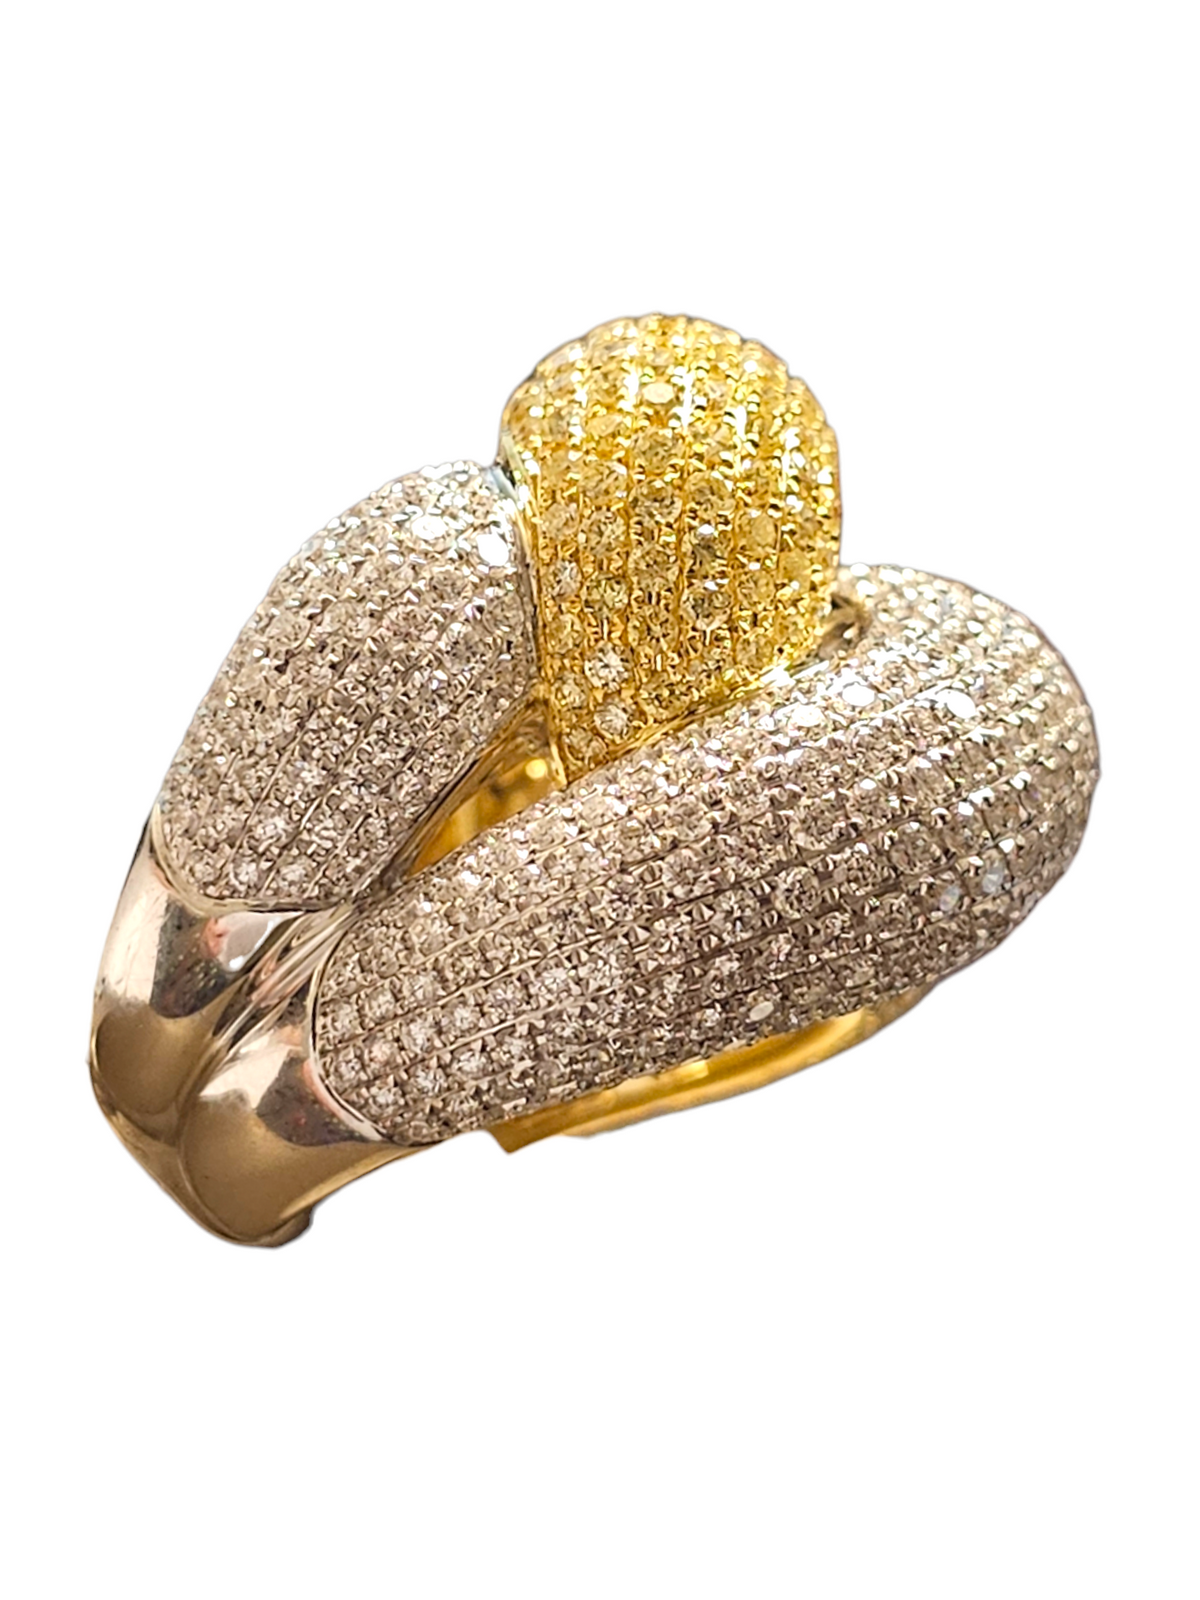 Two Tone 18K Gold Ladies Link Diamond Ring